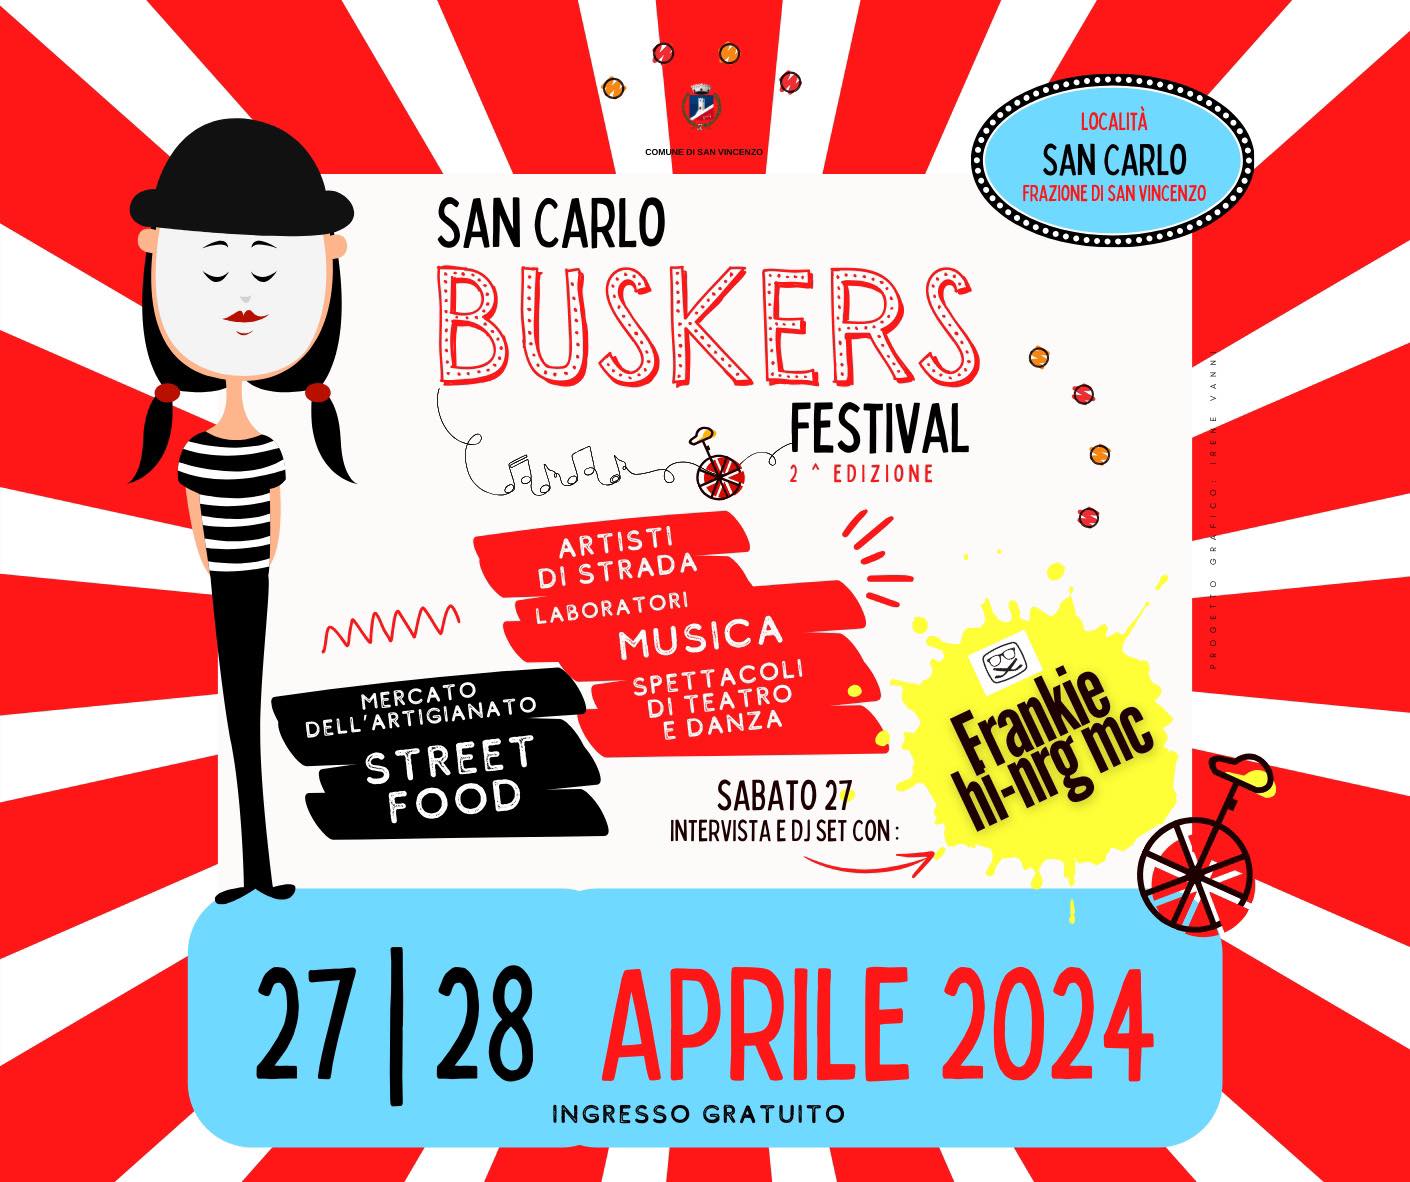 San Carlo Buskers Festival 